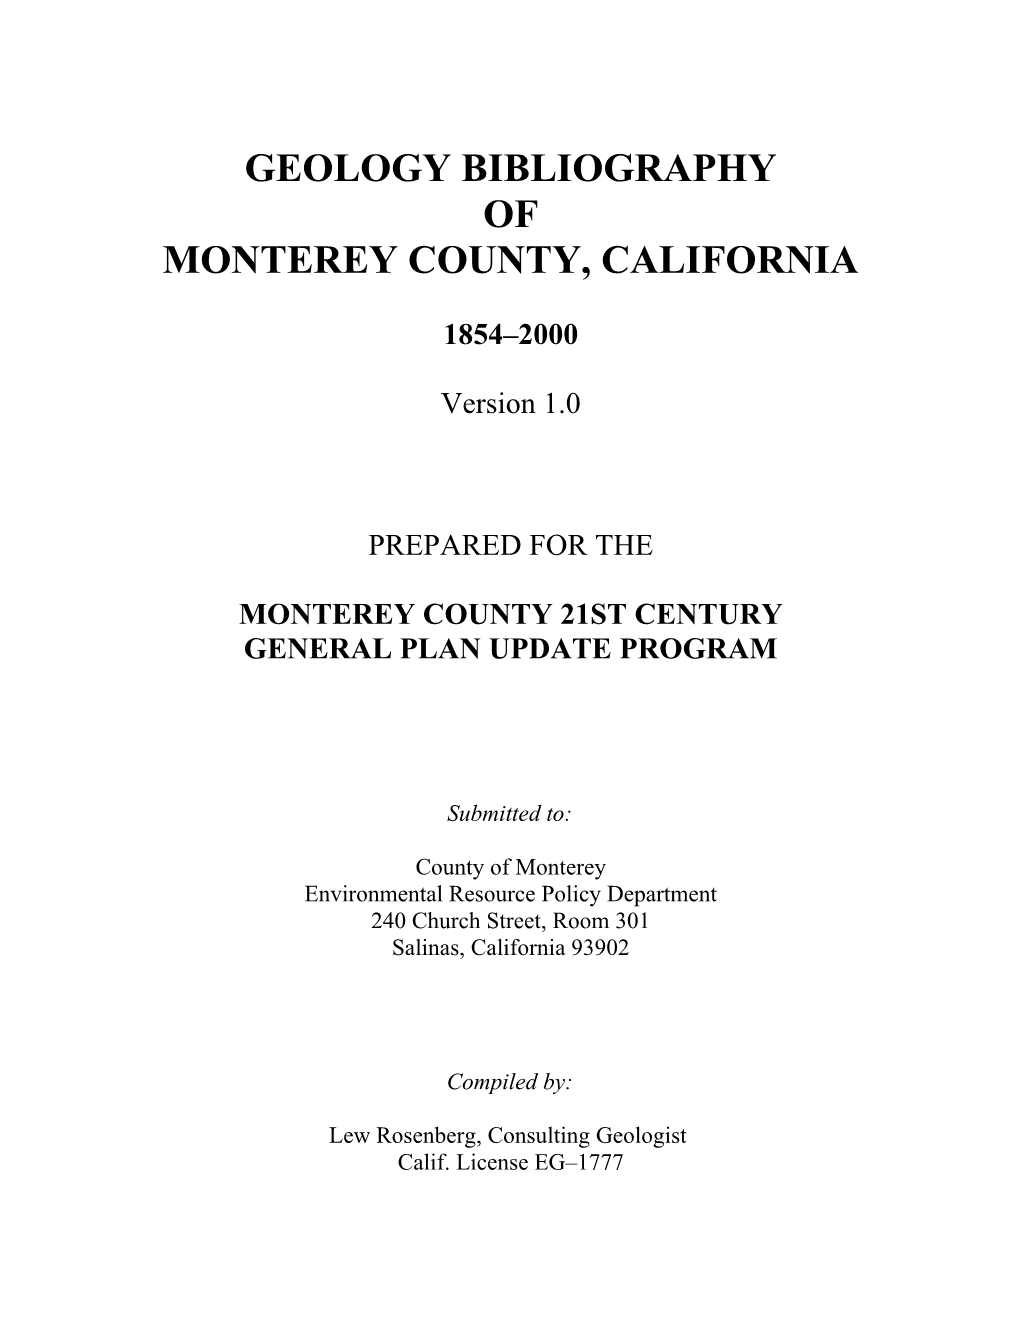 Geology Bibliography of Monterey Countyaugust 2000